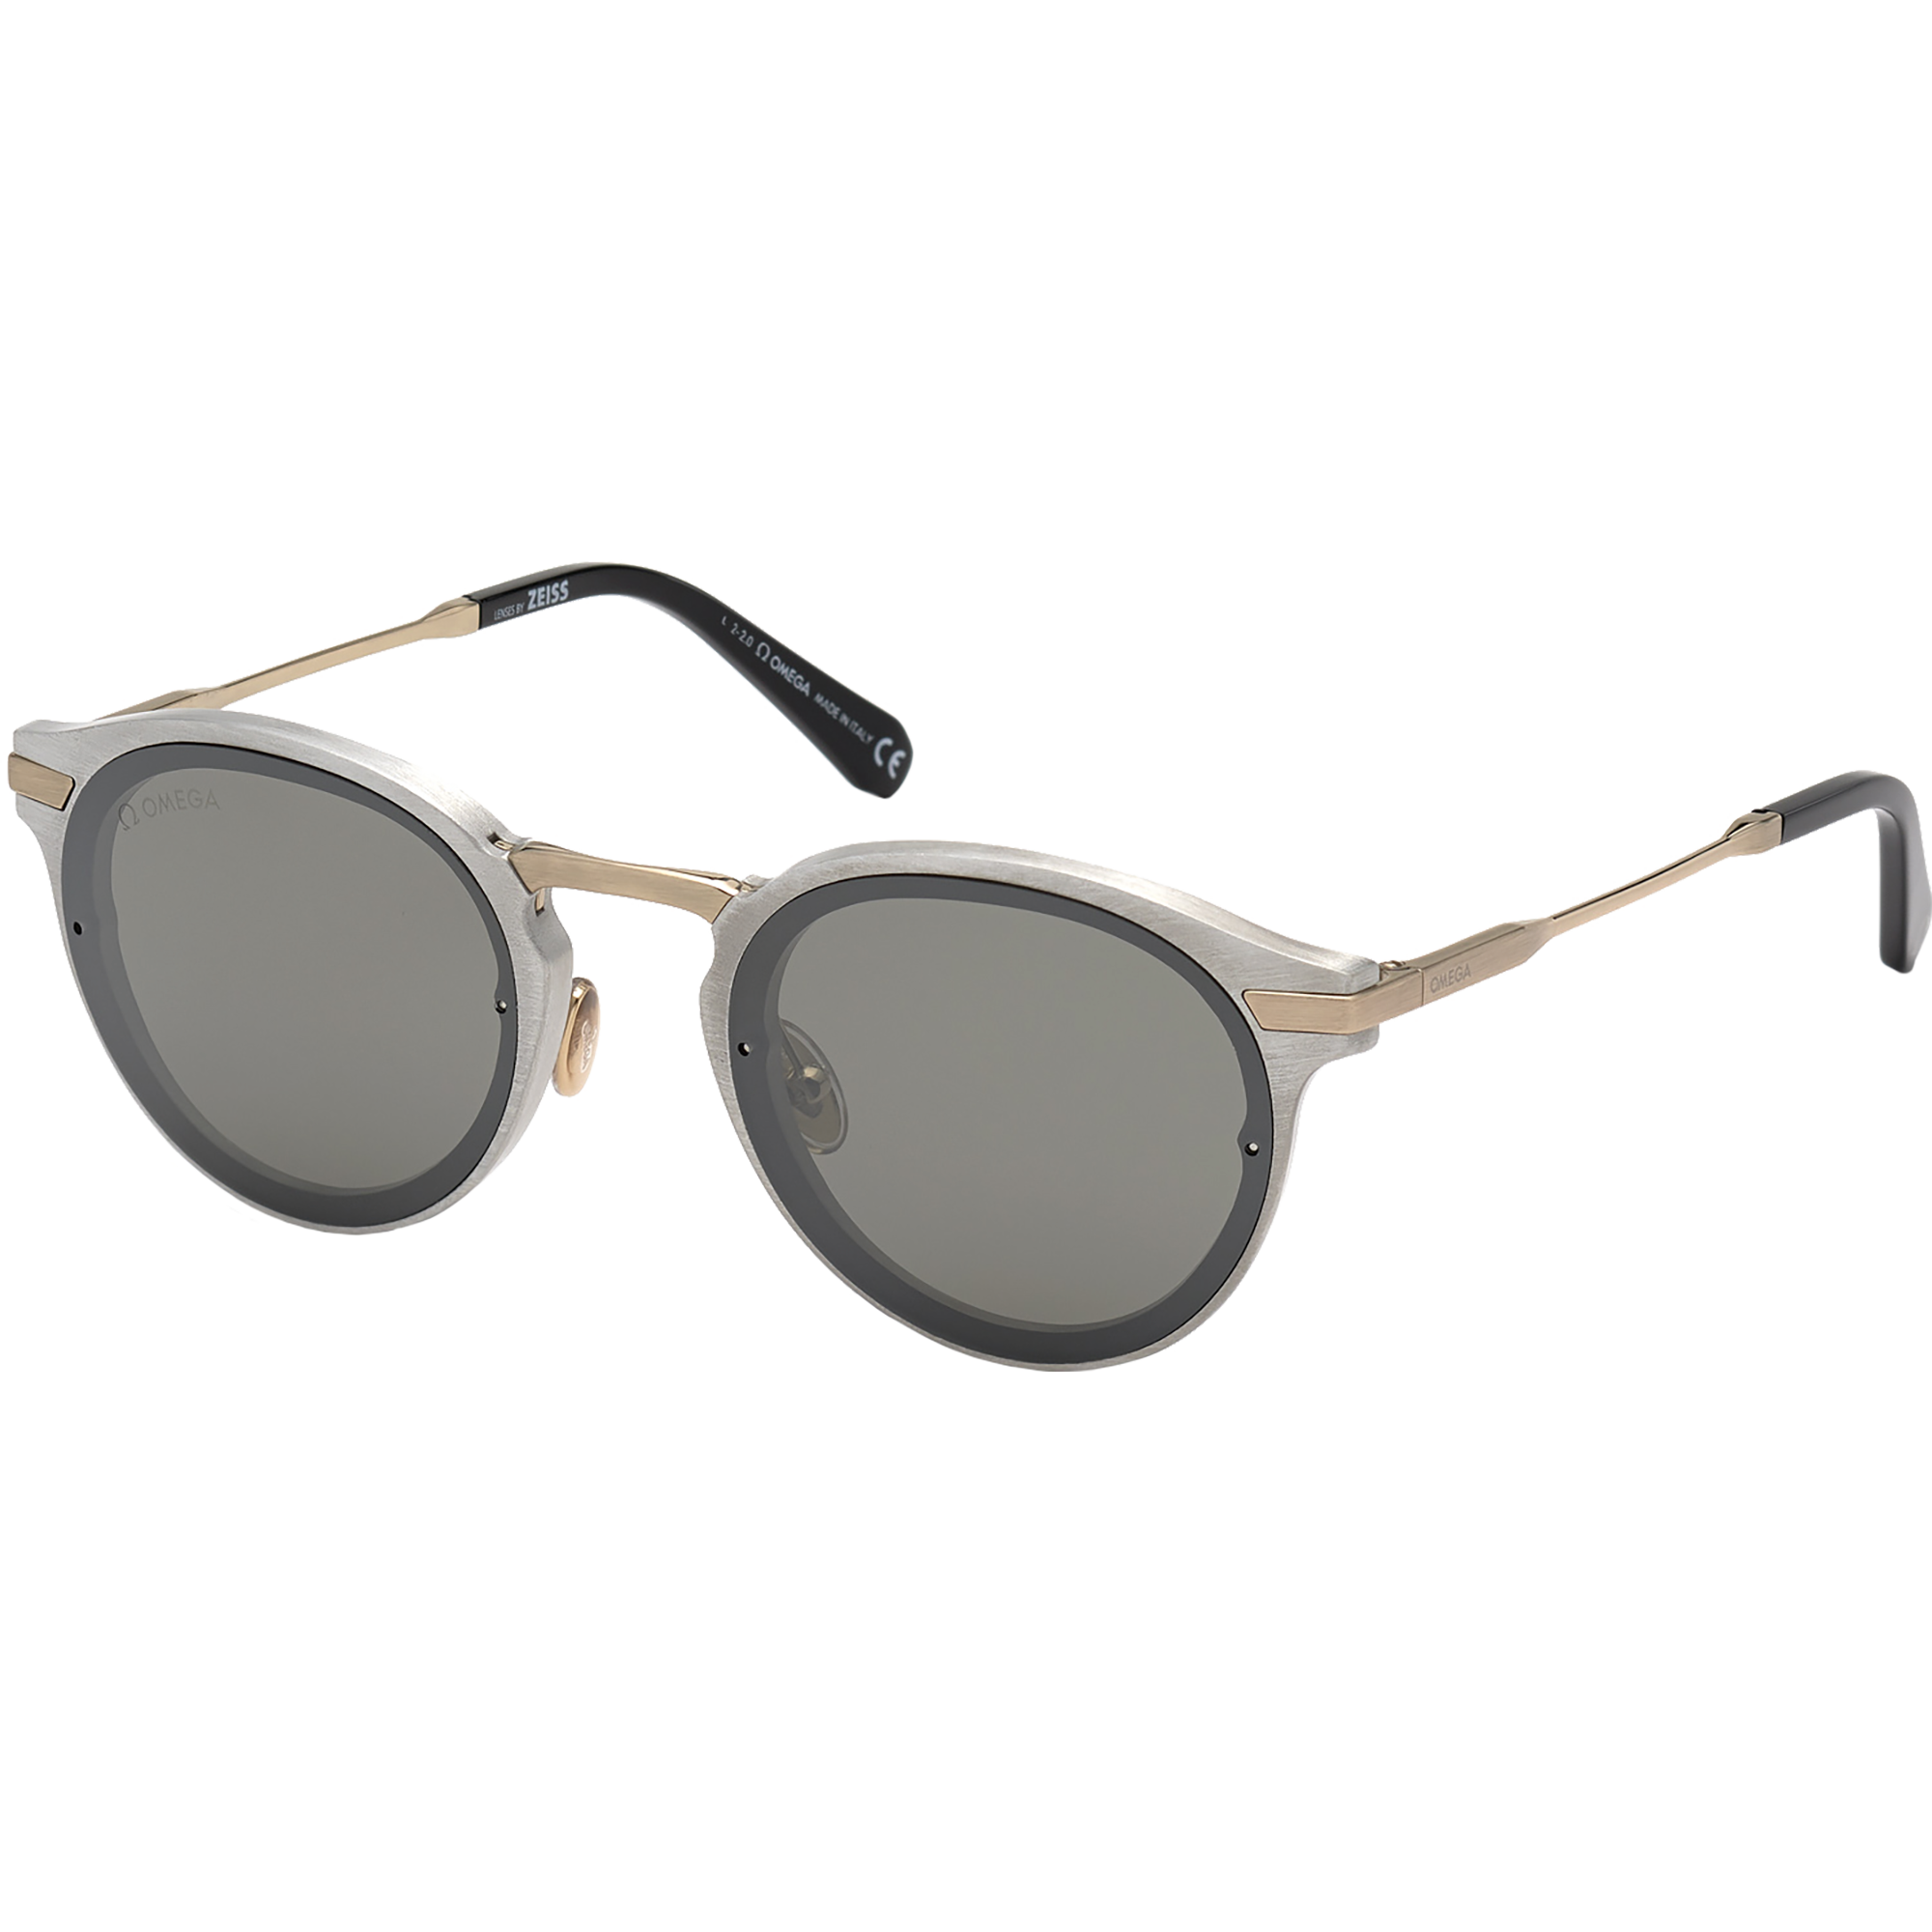 Sunglasses - Round style, Man - OM0029-H5416C